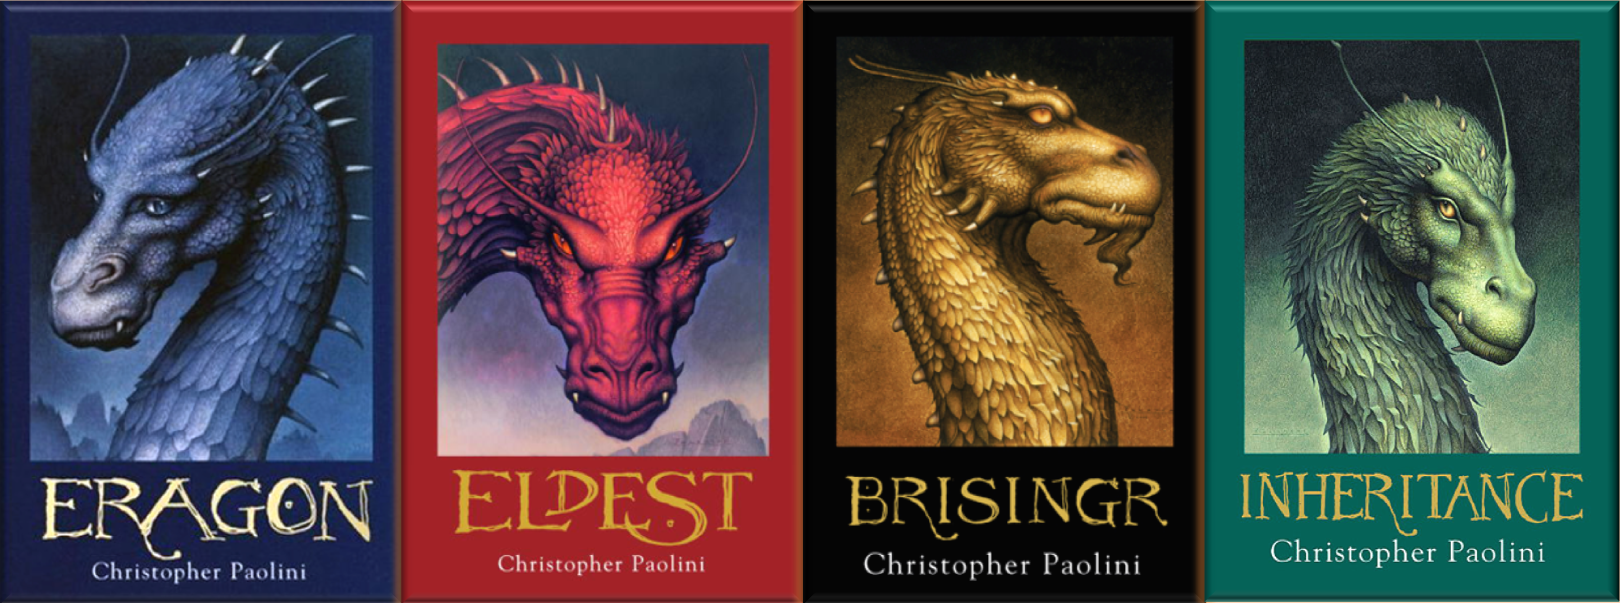 Eragon series covers